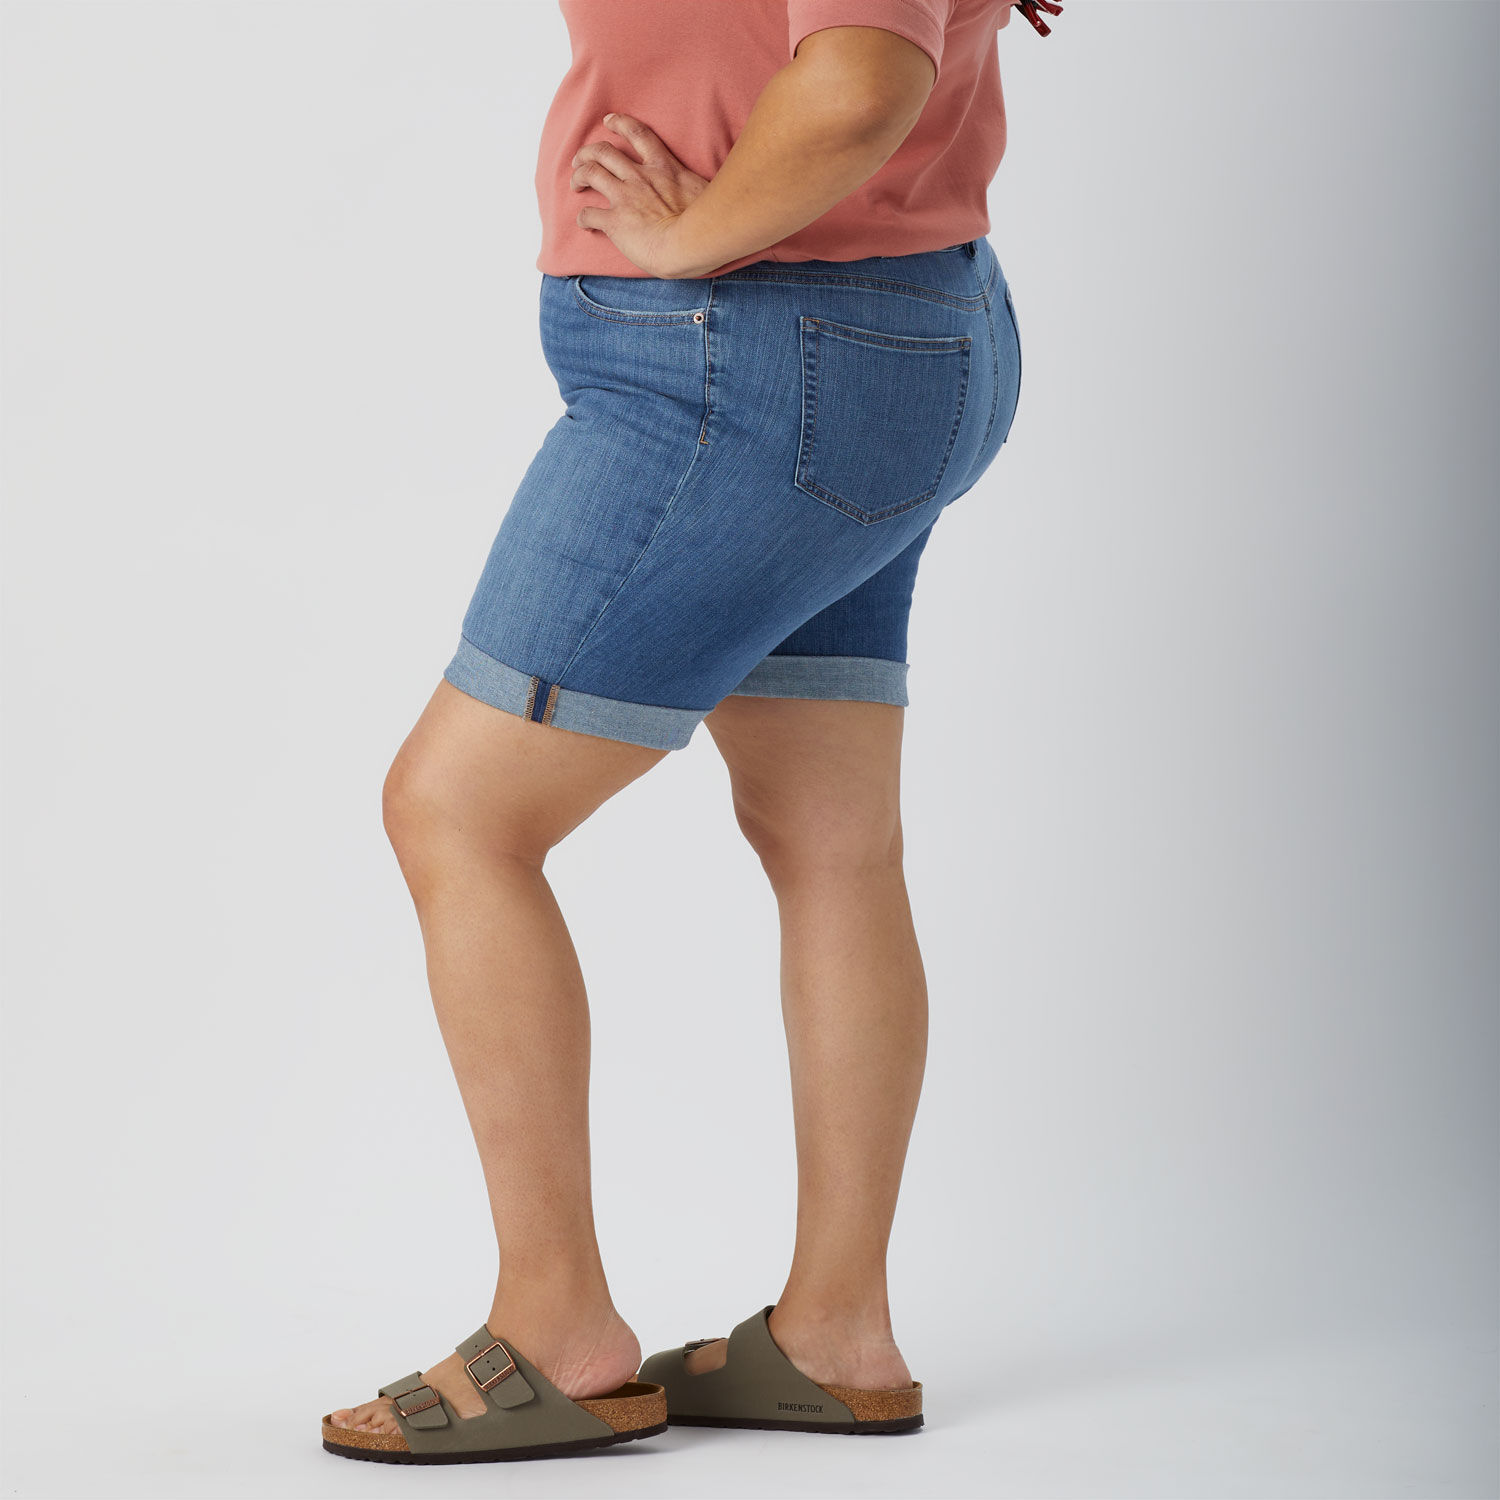 Briella 11 Inch Denim Shorts In Plus Size - New Wave Blue | NYDJ